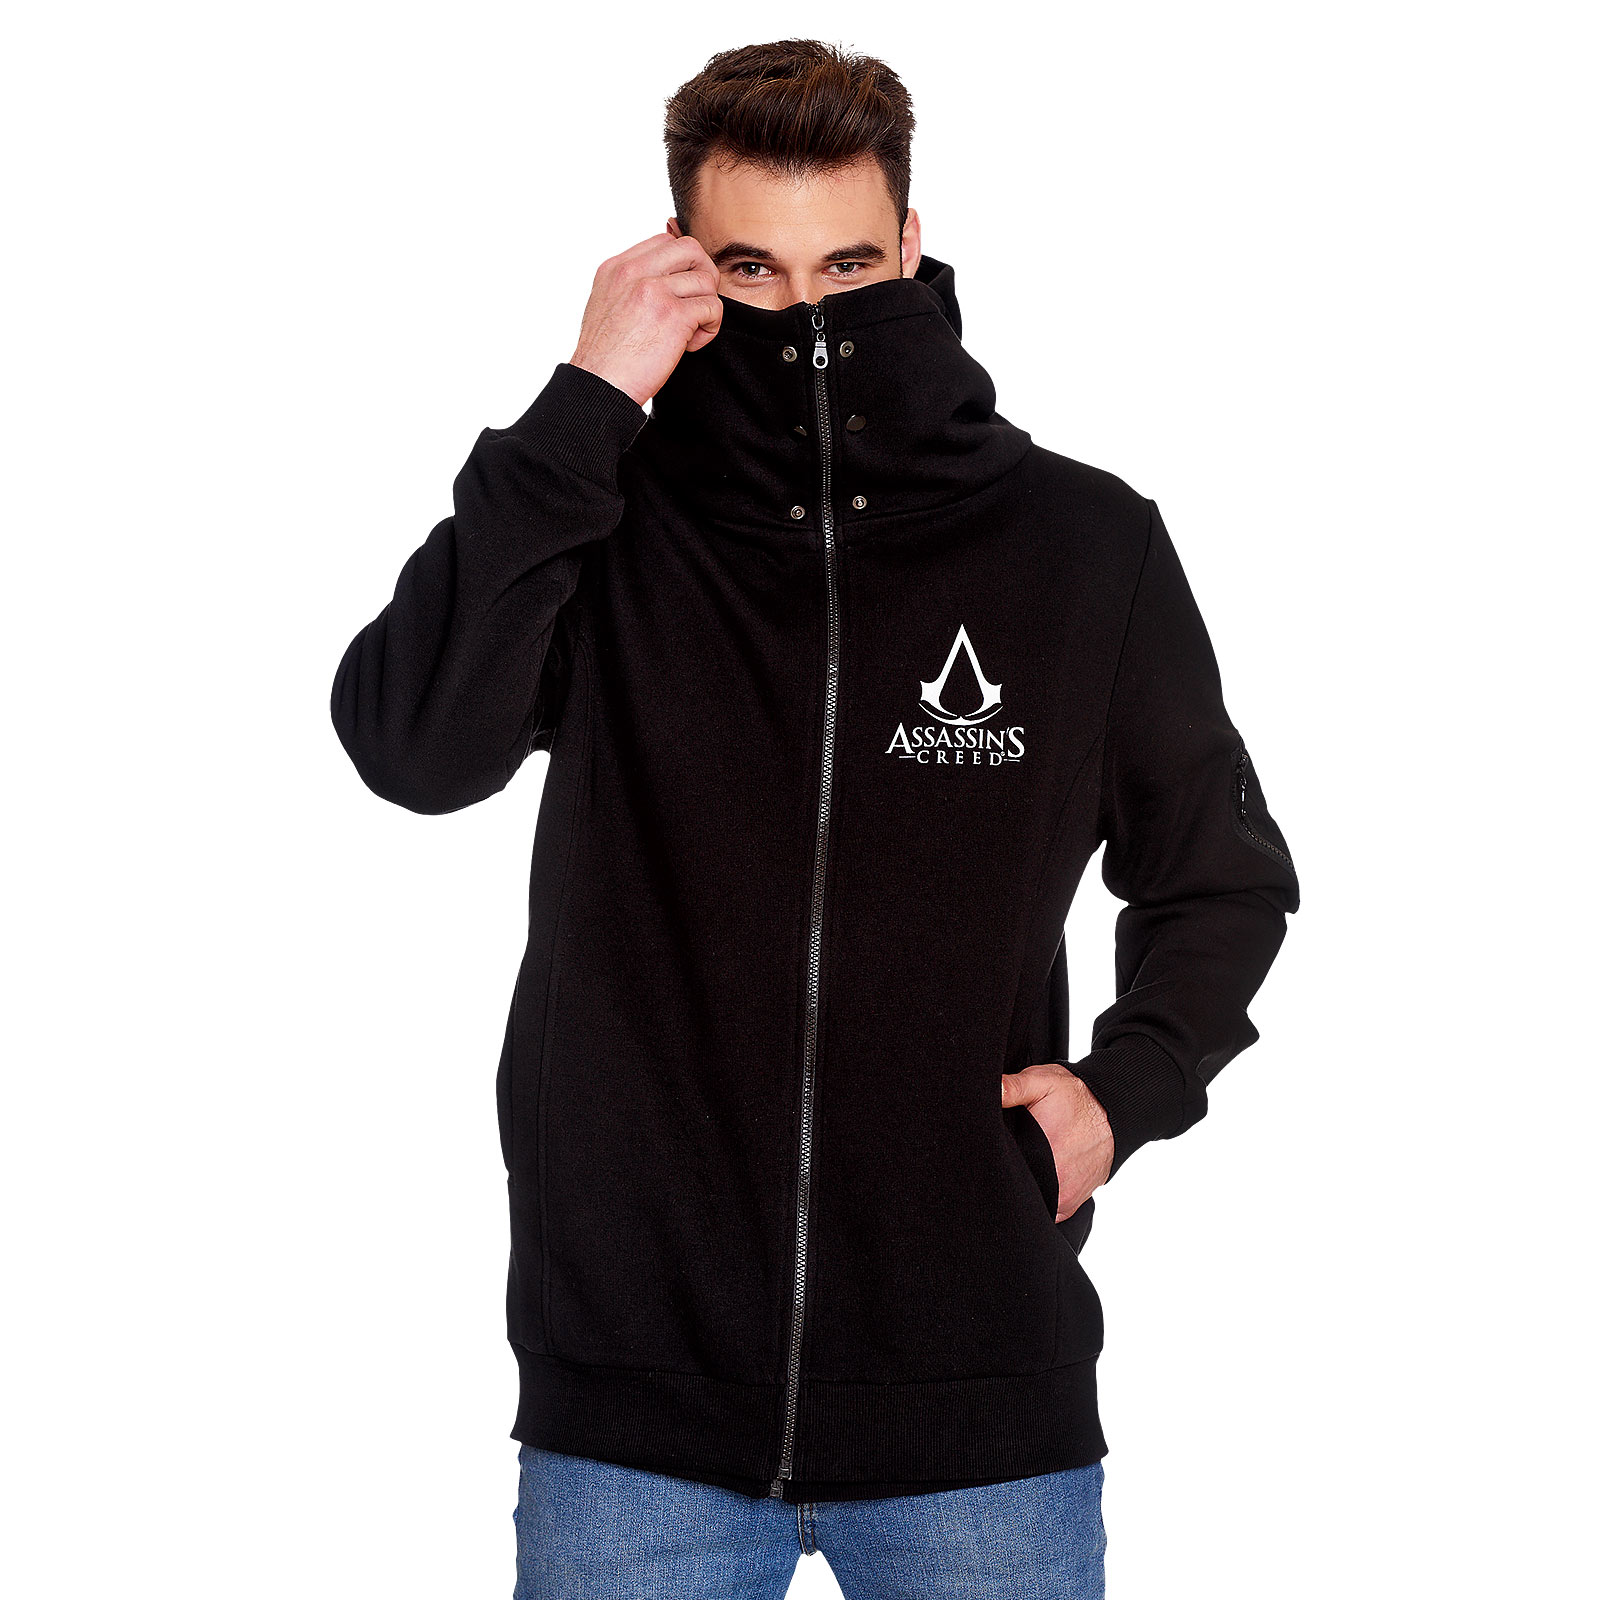 Assassins Creed - Logo Hoodie dubbelgelaagd zwart